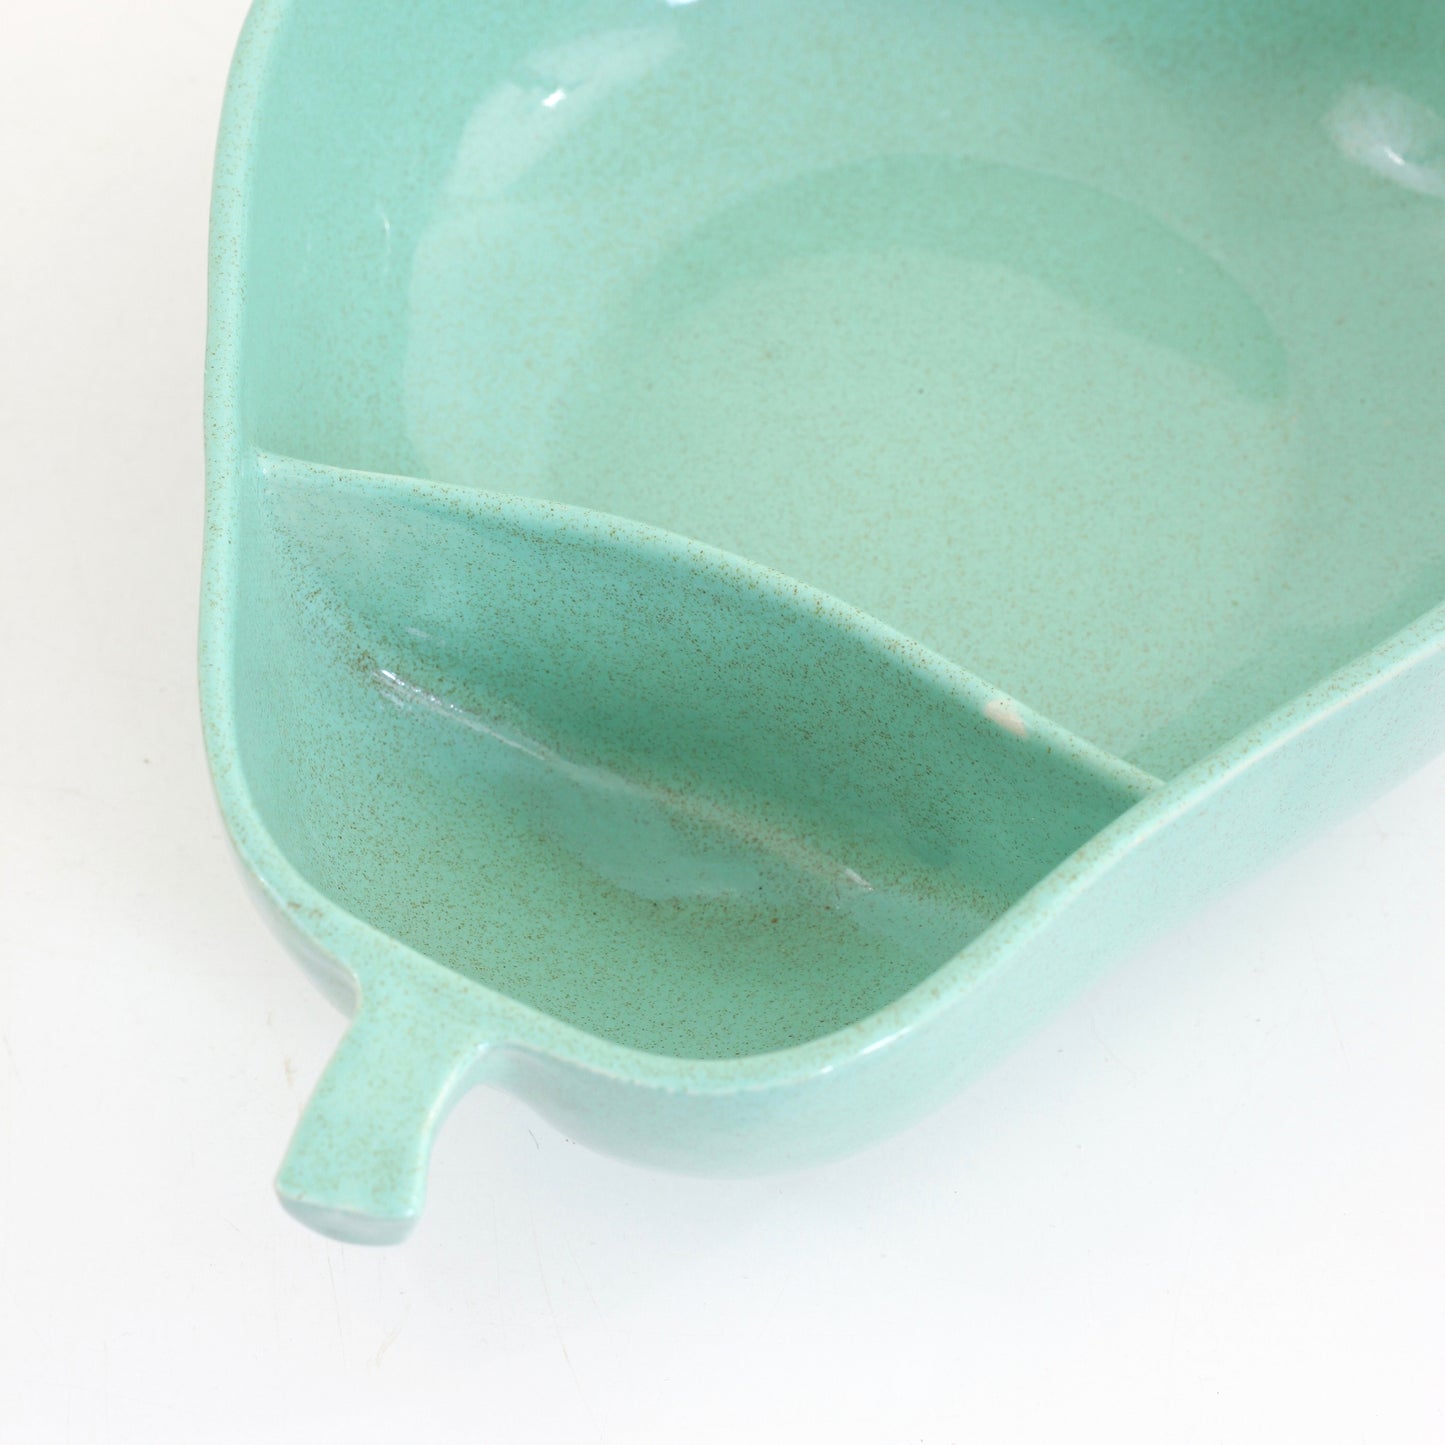 SOLD - Mid Century Aqua Ceramic Divided Pear Bowl by Pfaltzgraff